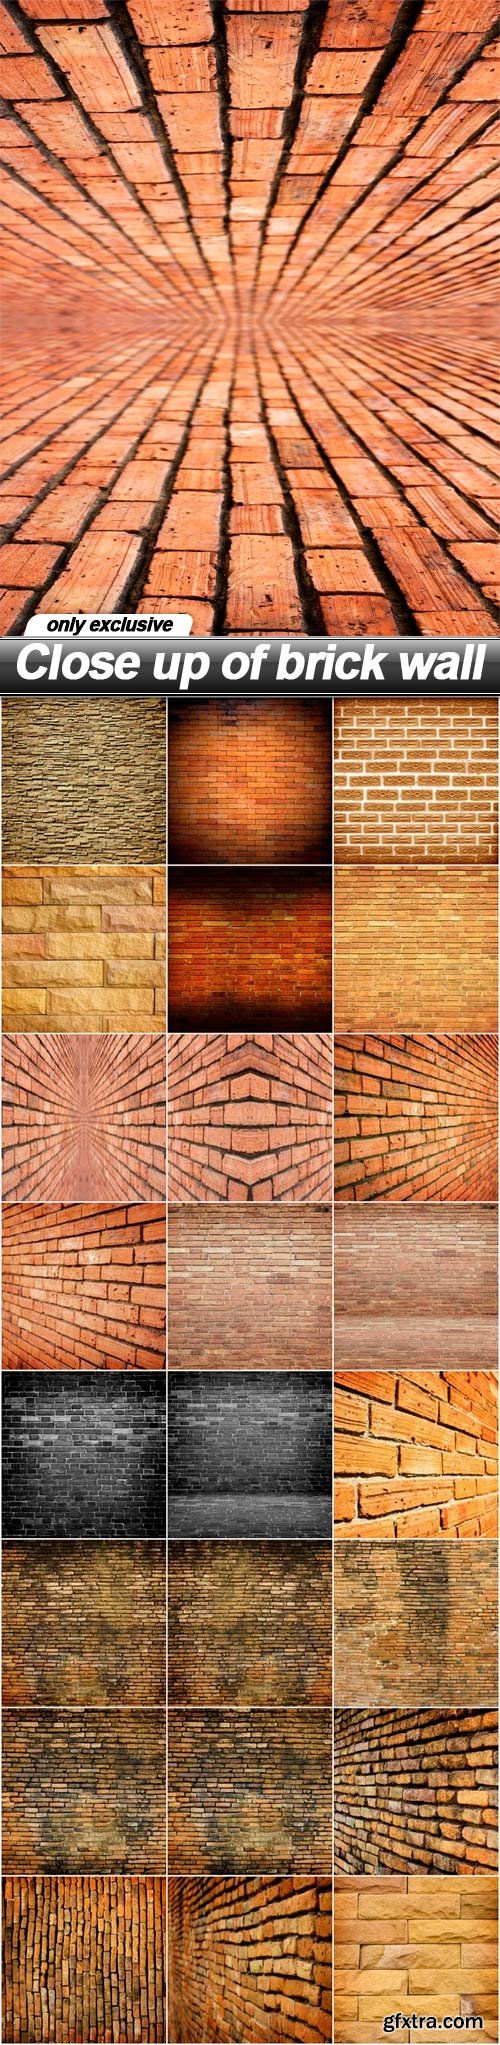 Close up of brick wall - 25 UHQ JPEG